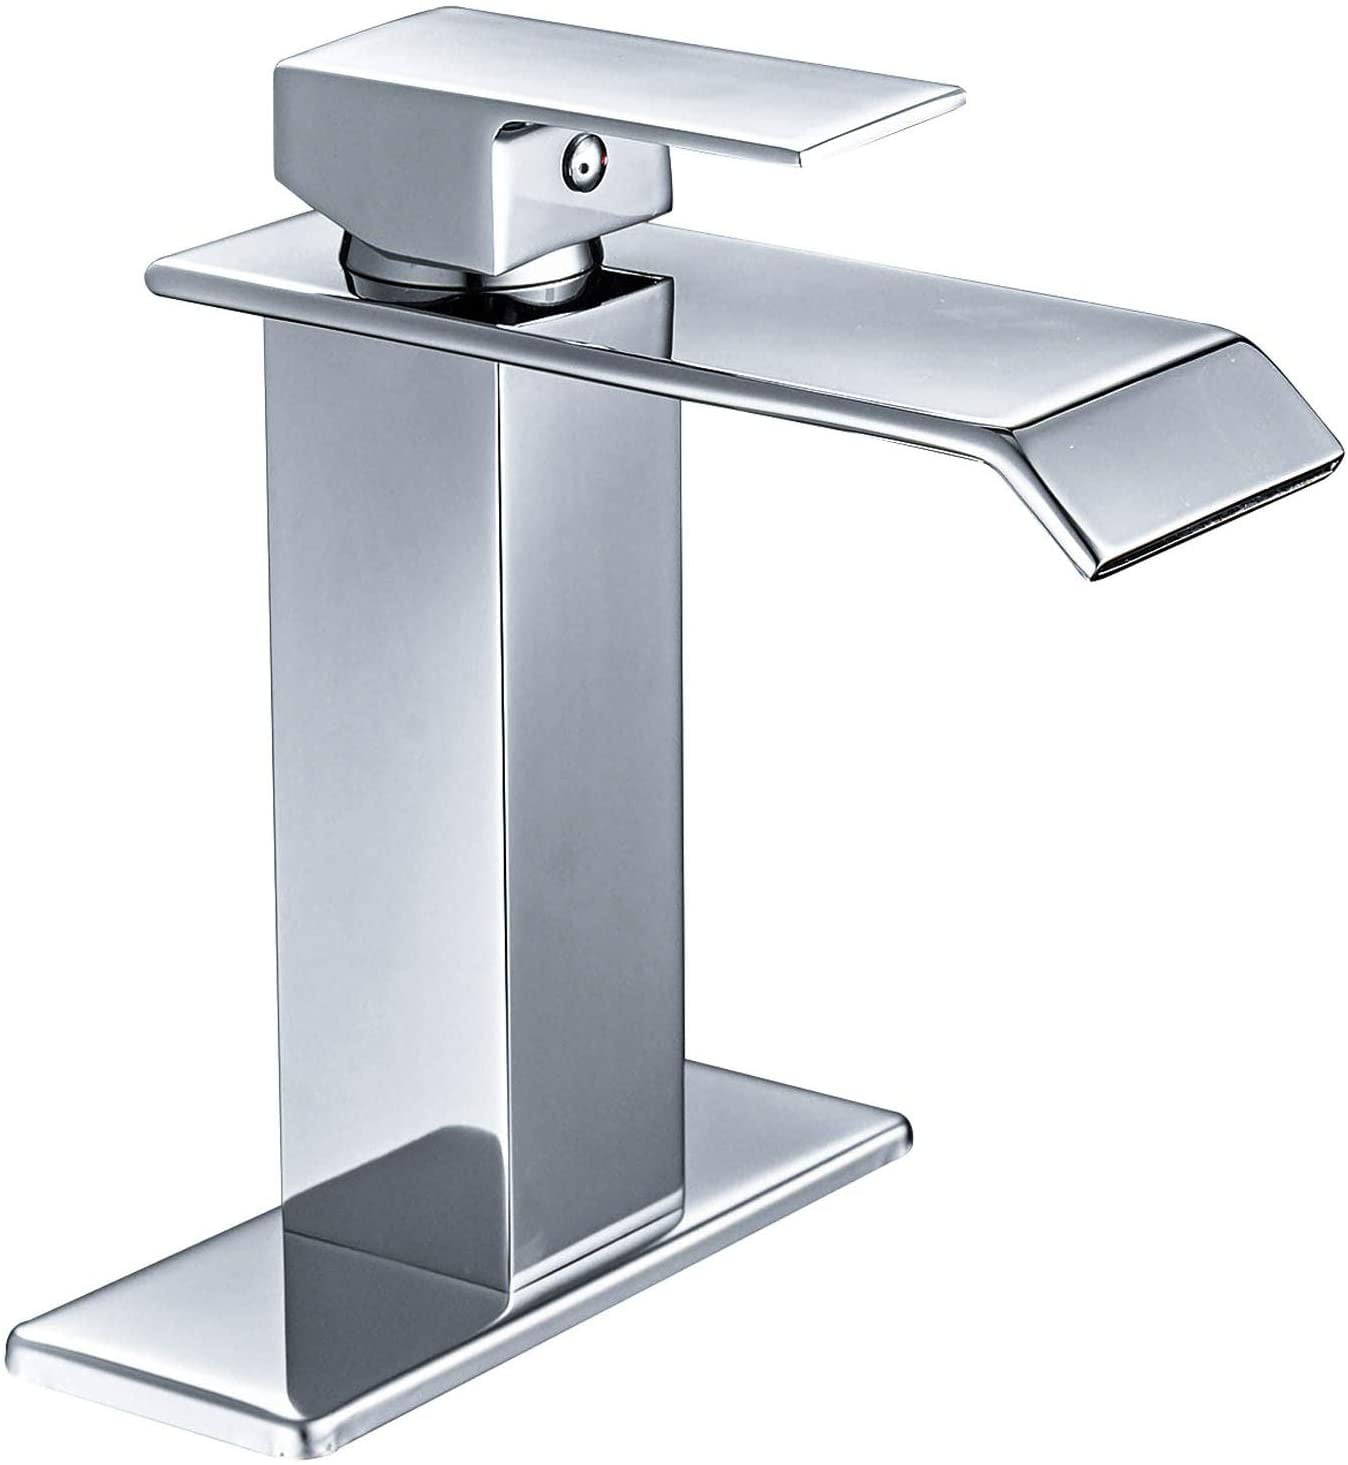 2 PCS Bathroom Faucet Waterfall Spout Wall Mounted Single Handle Basin Mixer Tap 